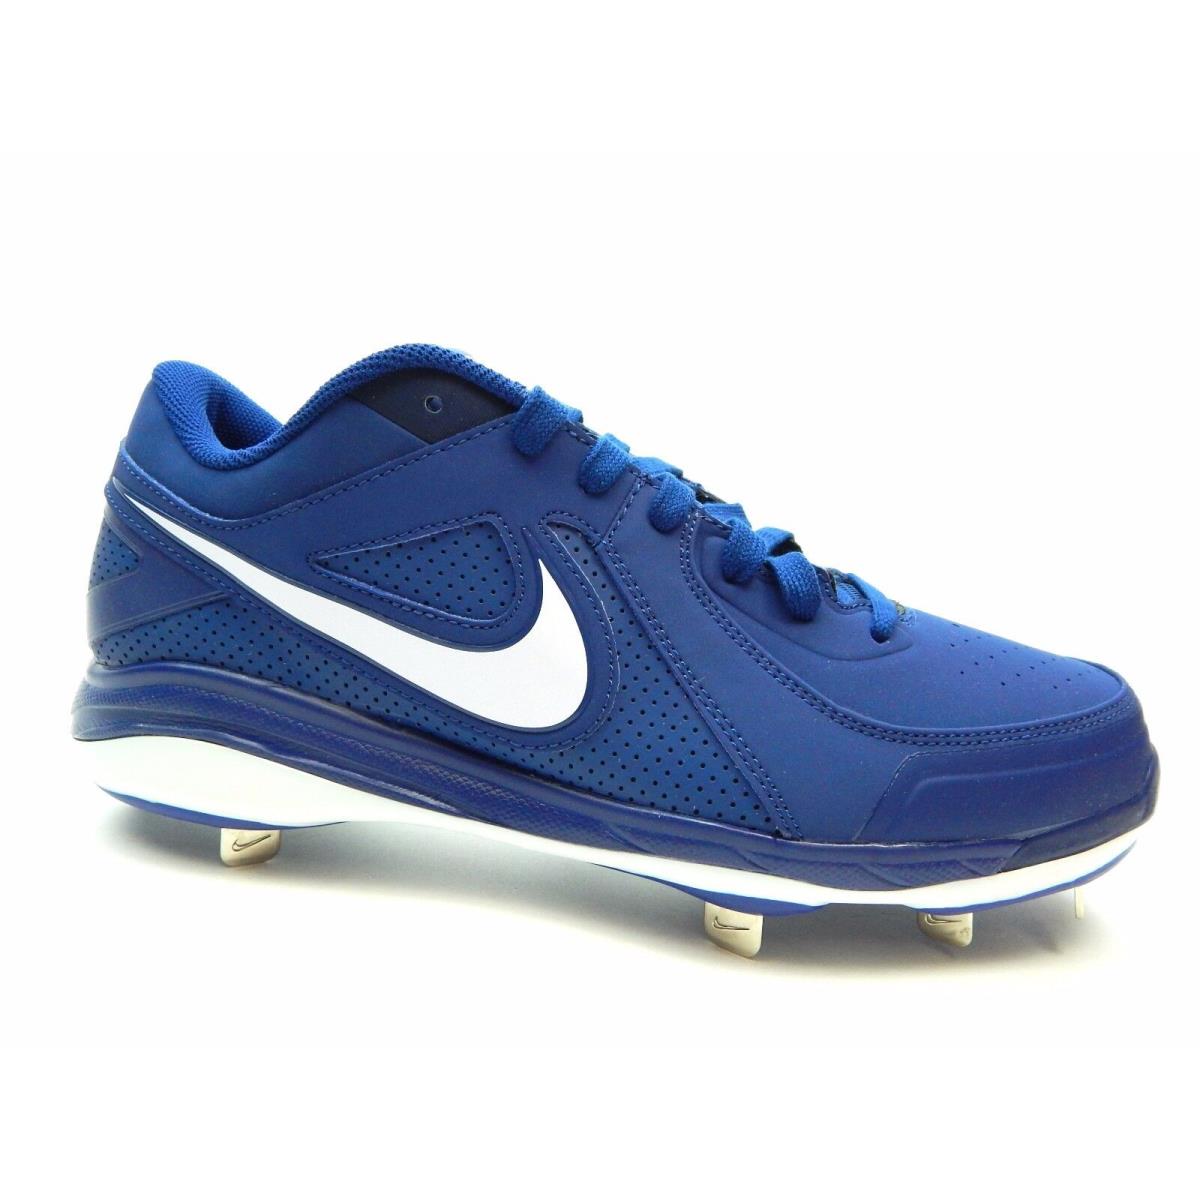 Nike Men`s Air Mvp Pro Metal 524641 410 Cleats Royal Shoes Size 12.5 - Blue